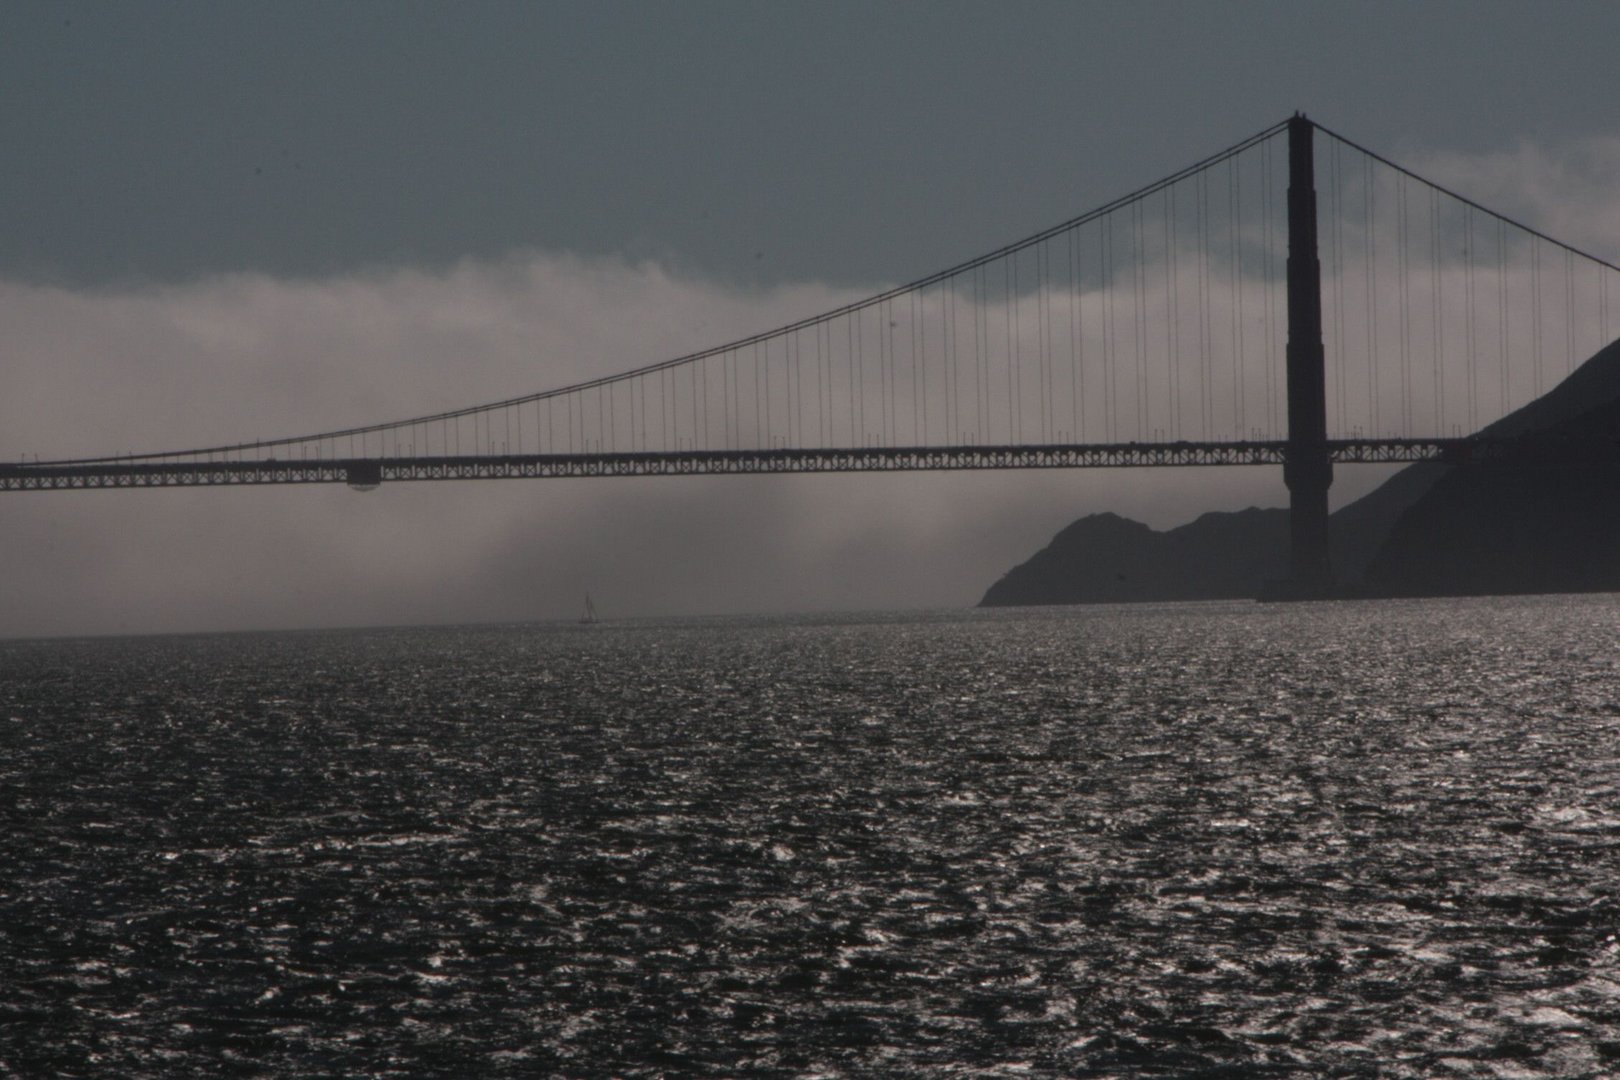 Golden Gate Bridge - the fog coming